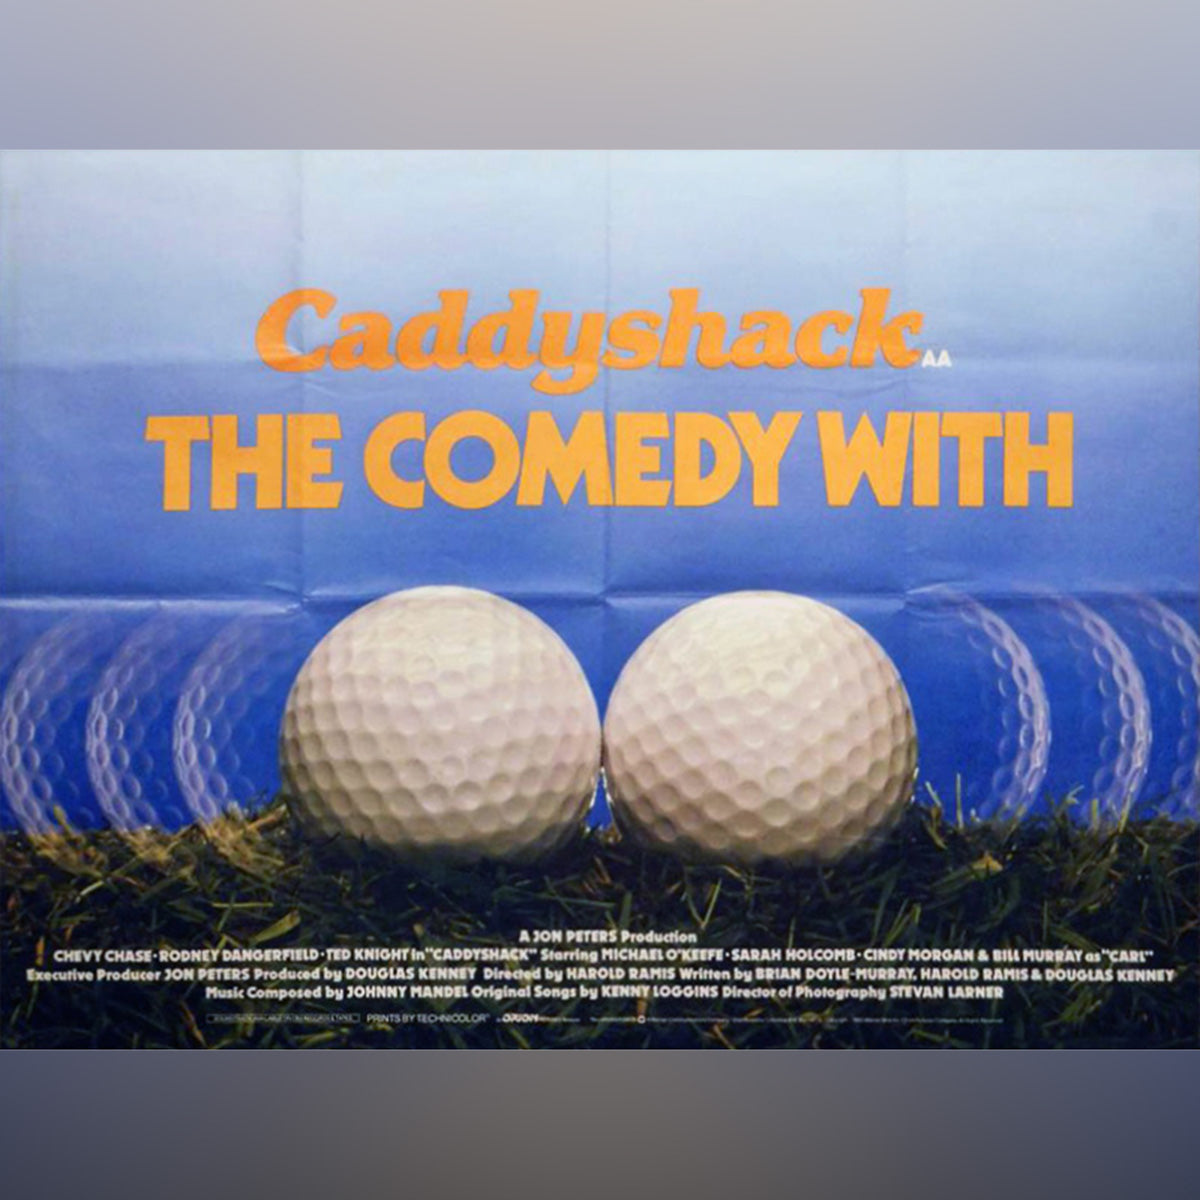 Original Movie Poster of Caddyshack (1980)